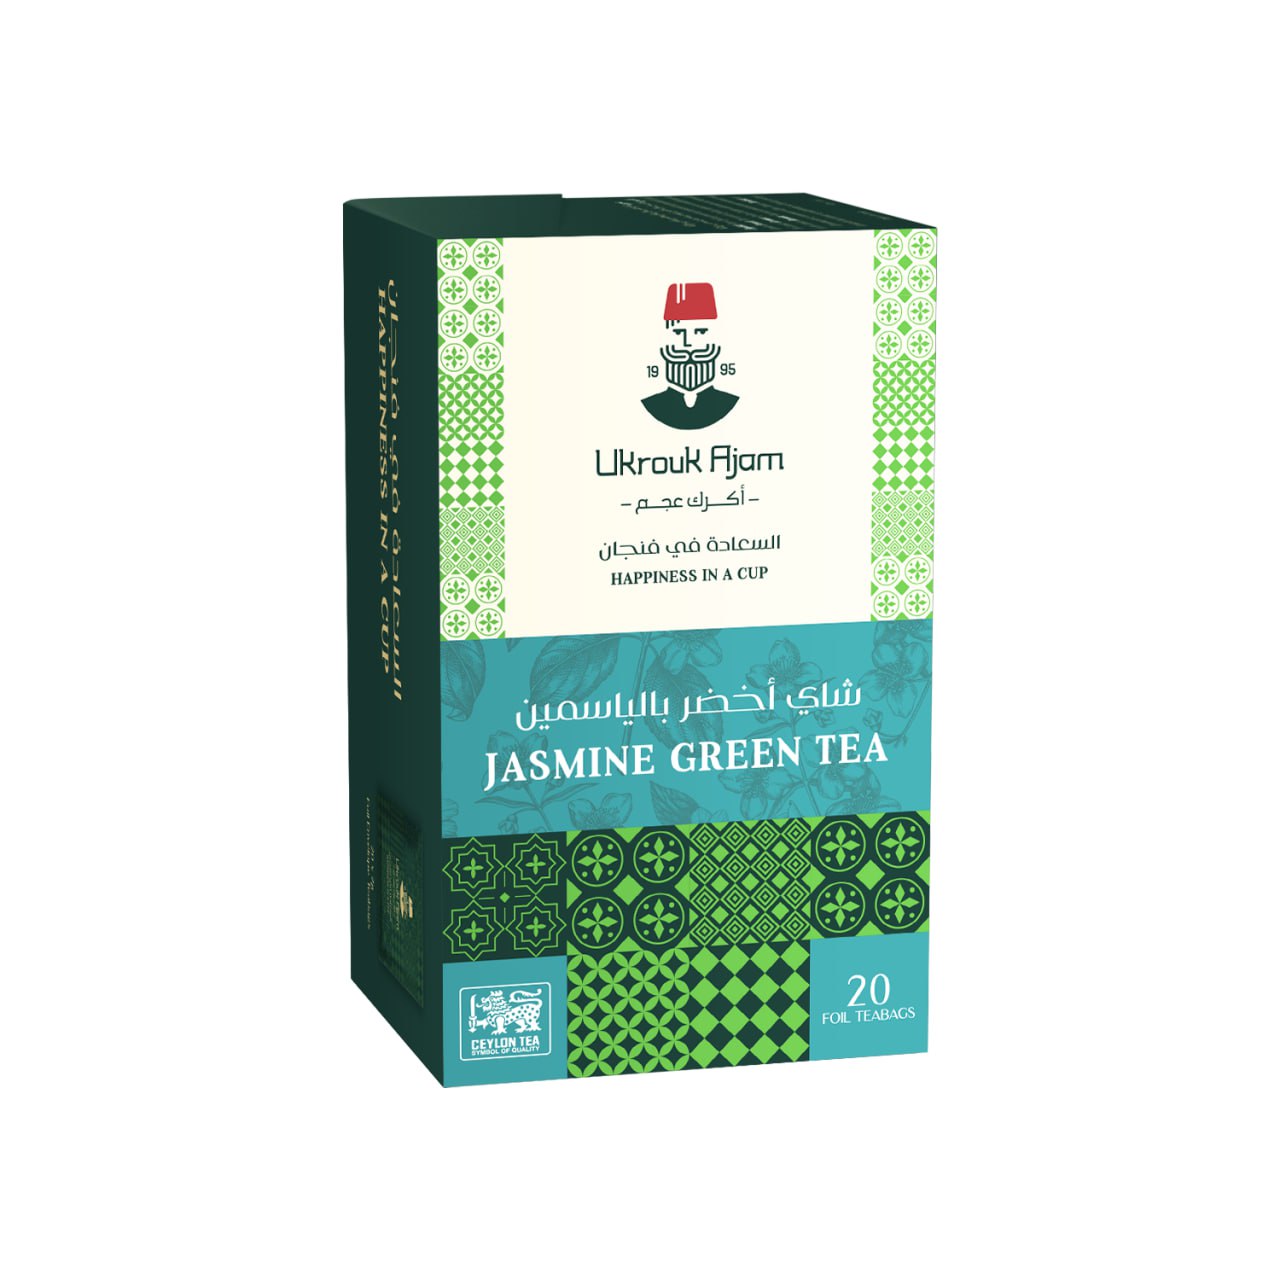 Ukrouk Ajam Jasmine Green Tea, 20 Tea Bags